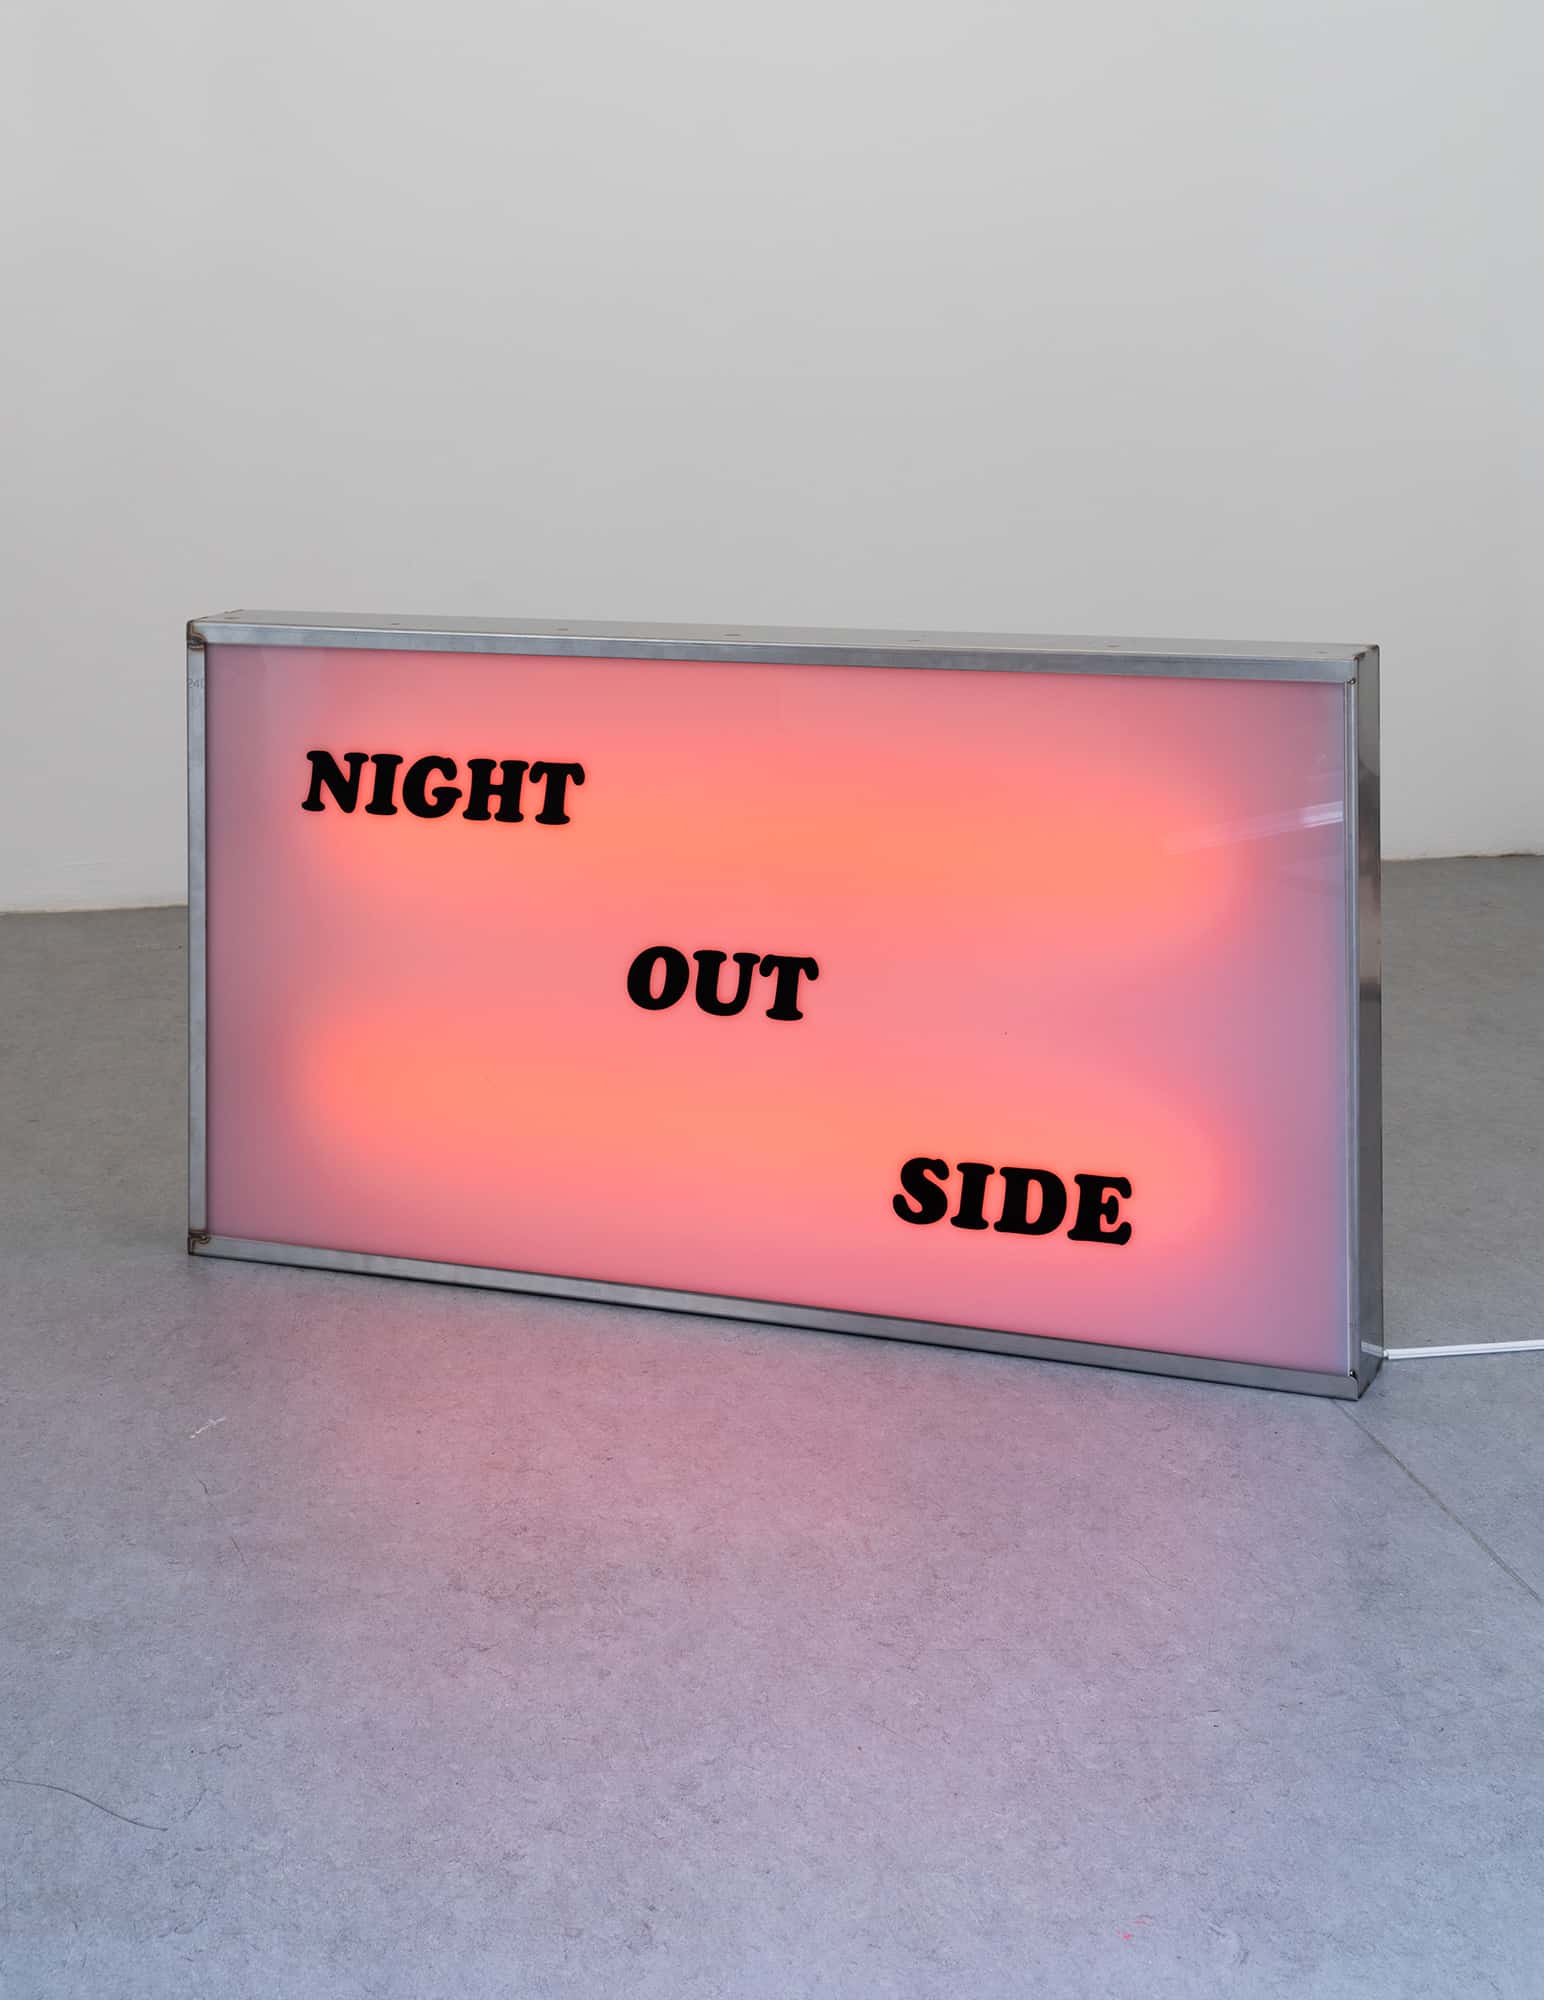 Night out side / lightbox, 120 cm x 60 cm x 5 cm / 2019